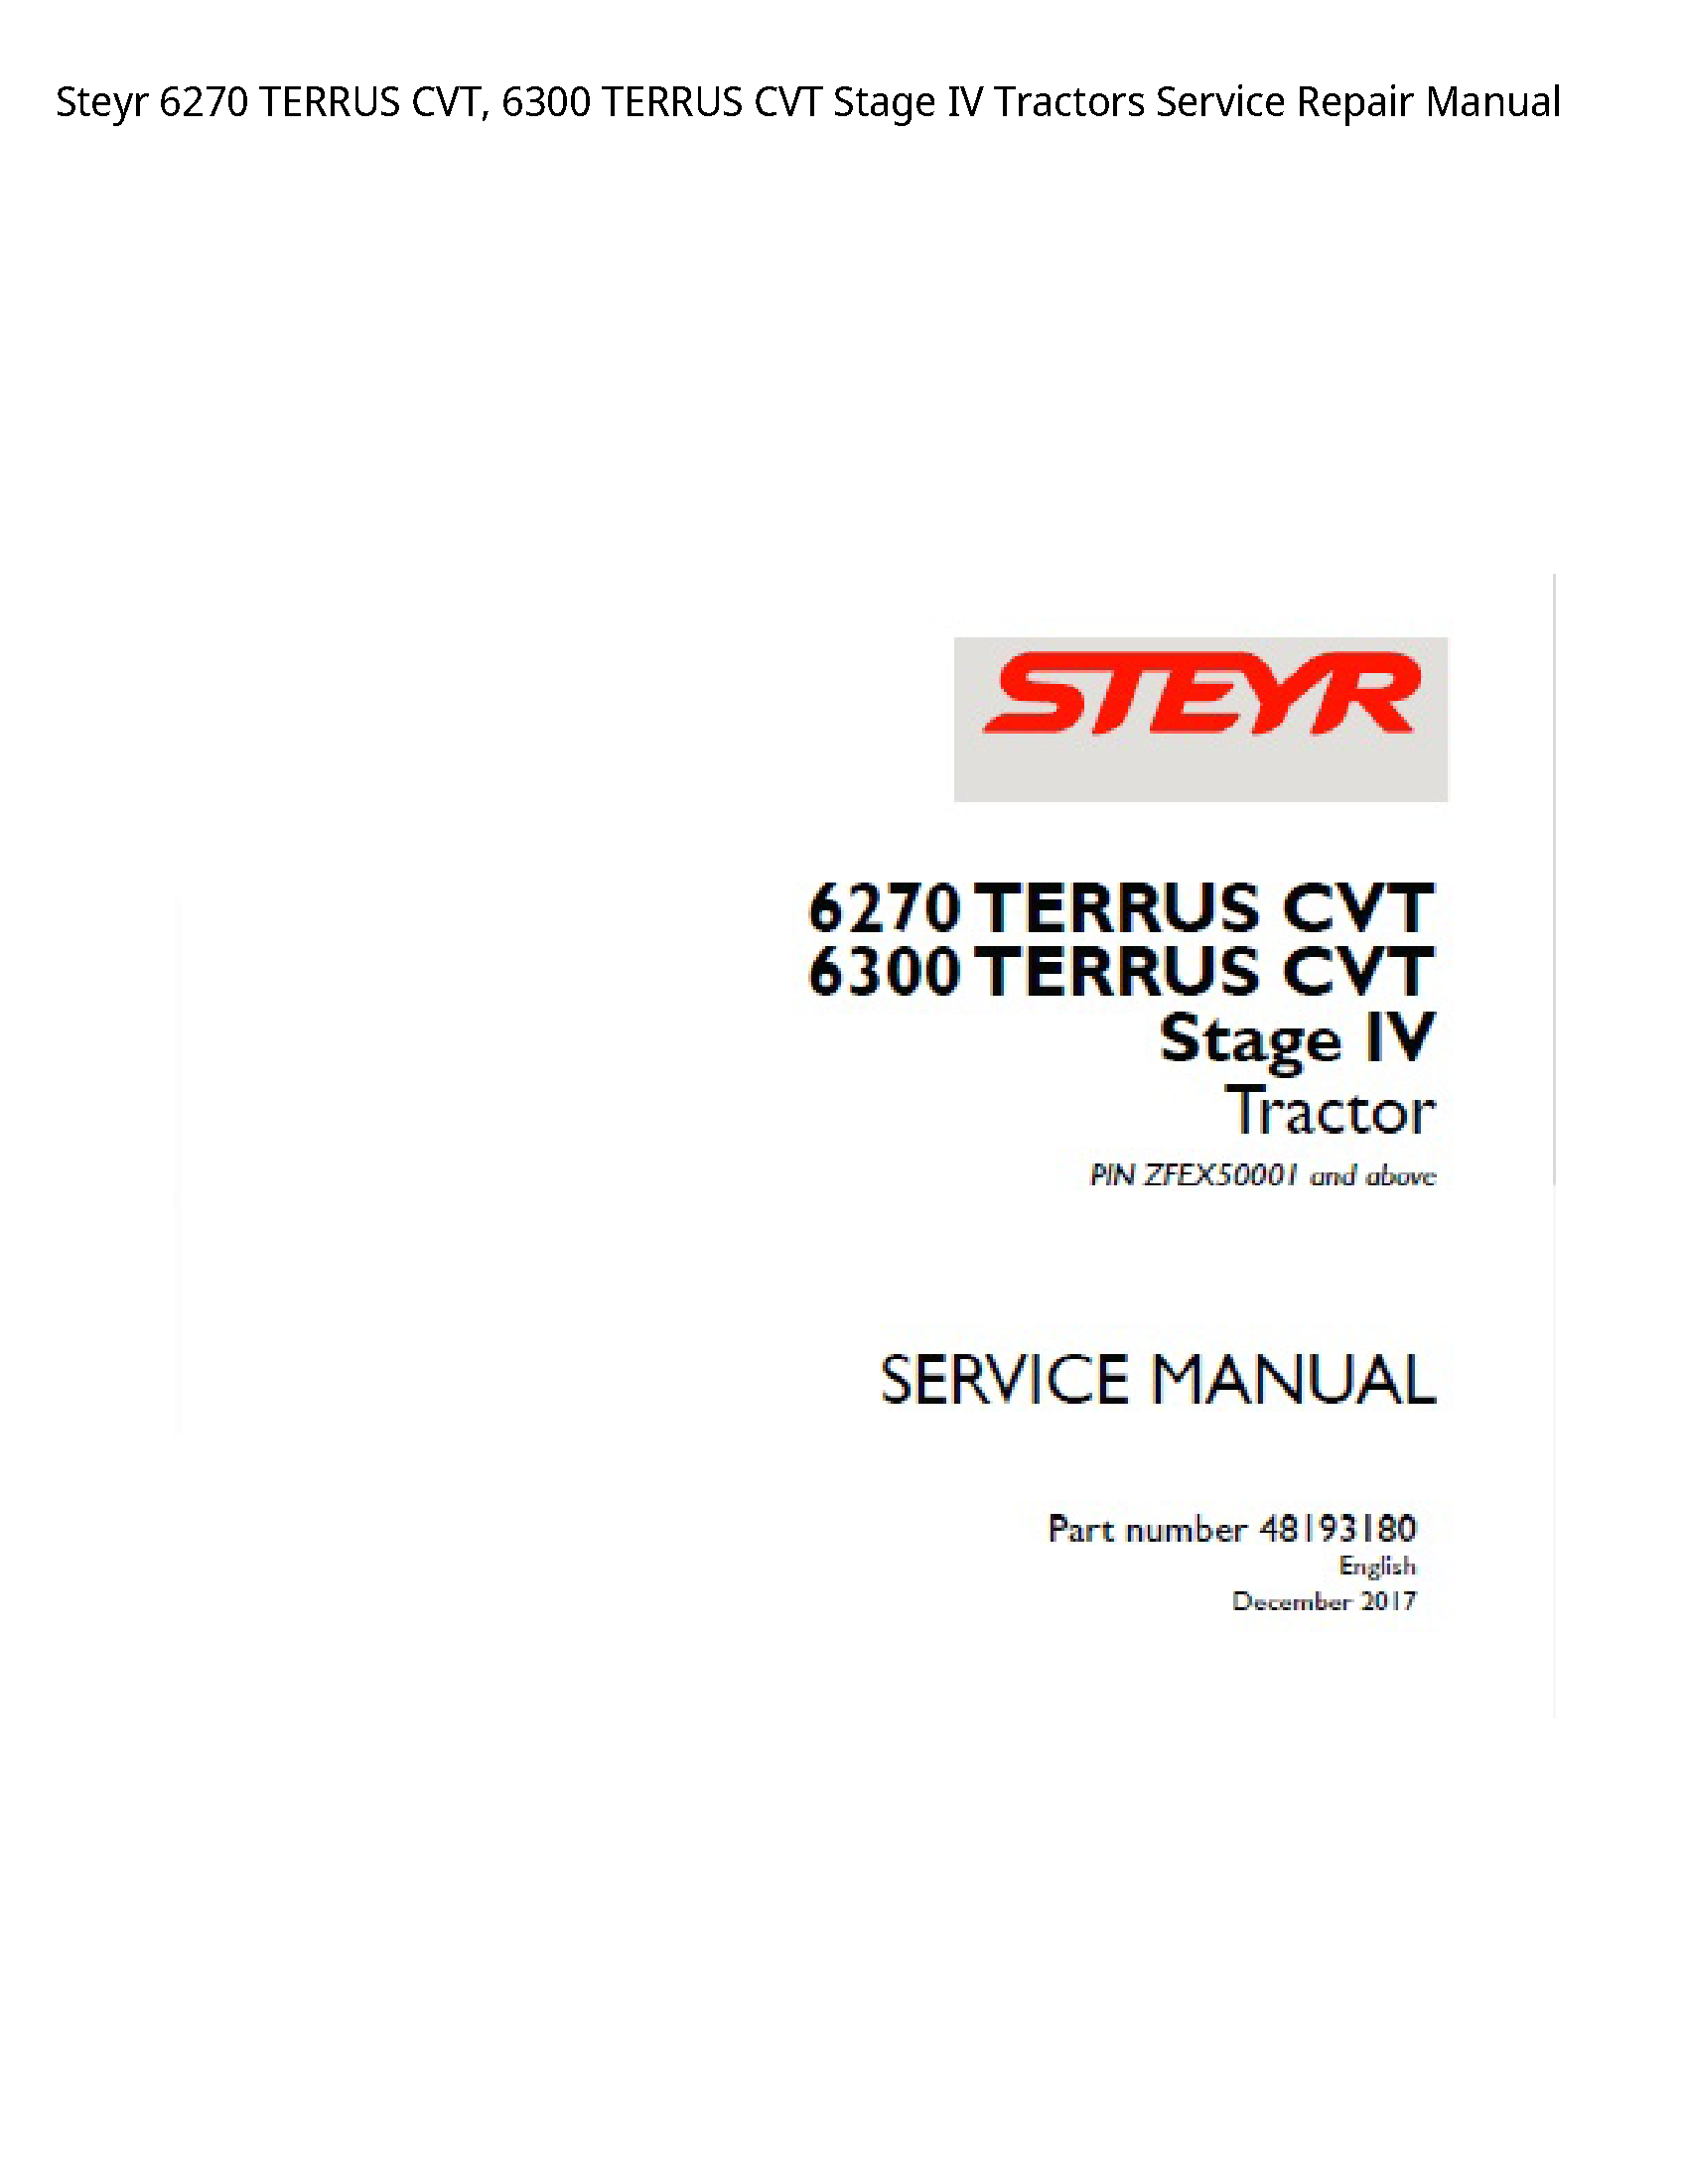 Steyr 6270 TERRUS CVT manual